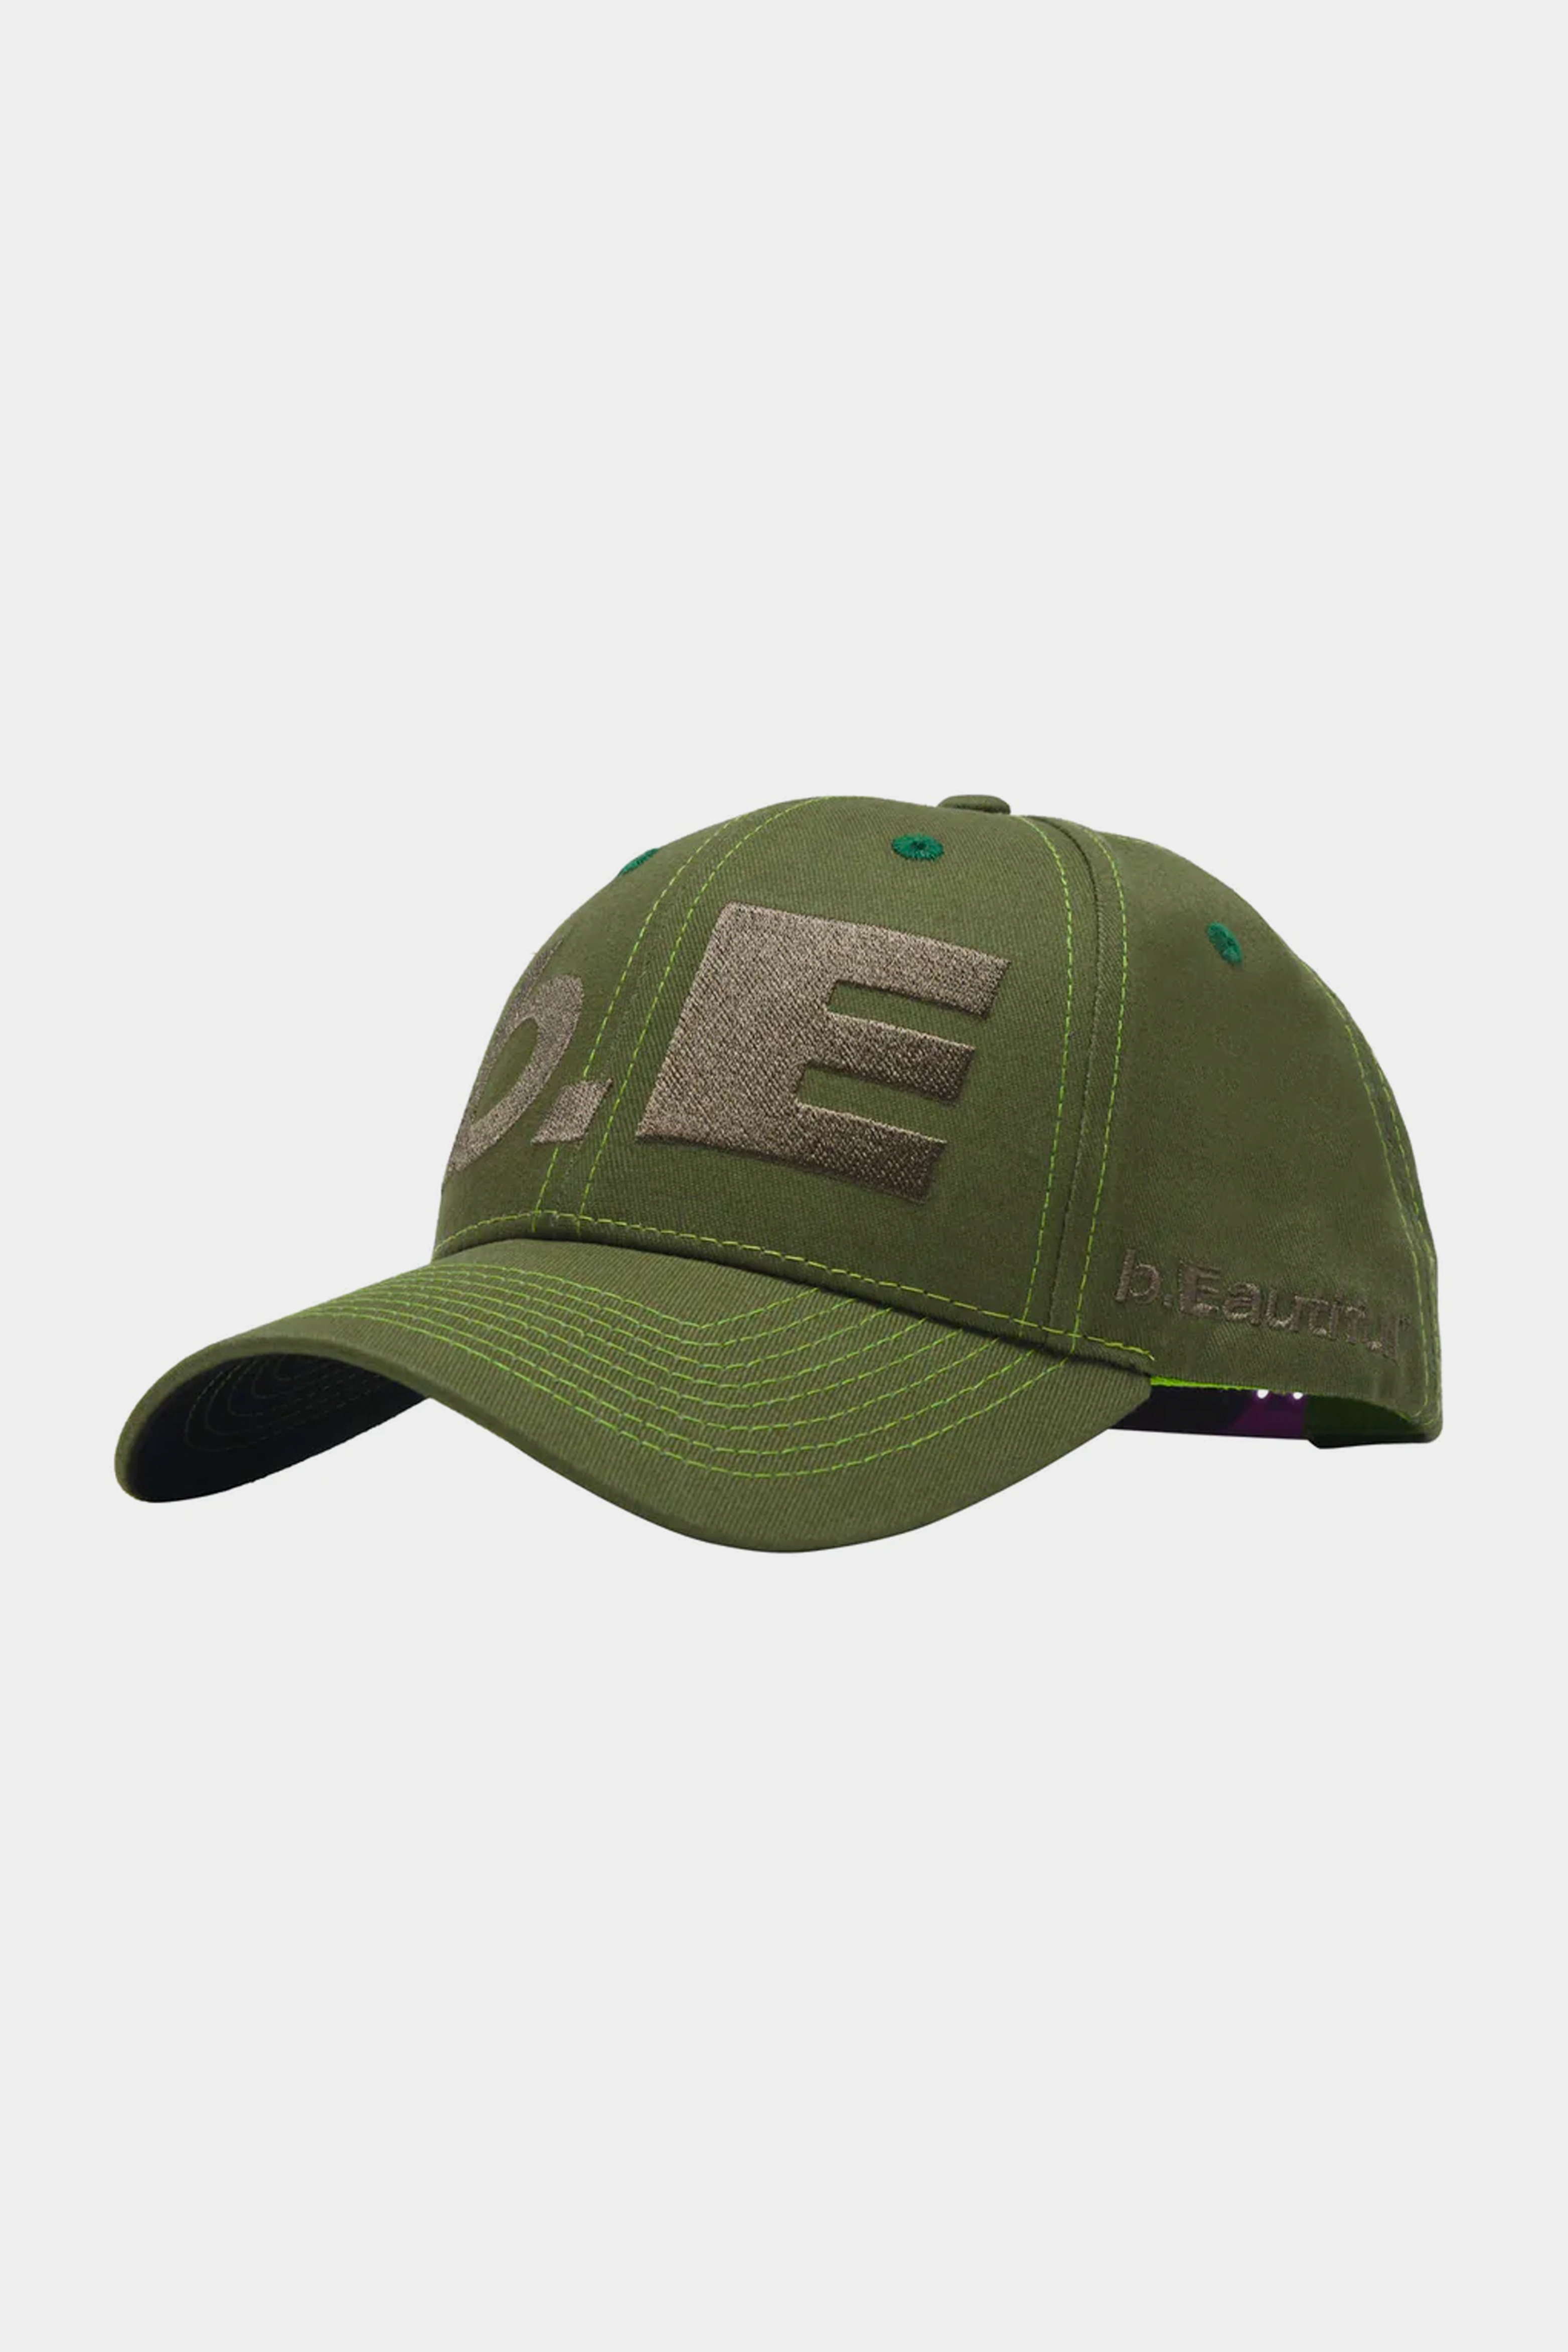 Selectshop FRAME - B.EAUTIFUL b.E Hat (Green) All-Accessories Concept Store Dubai